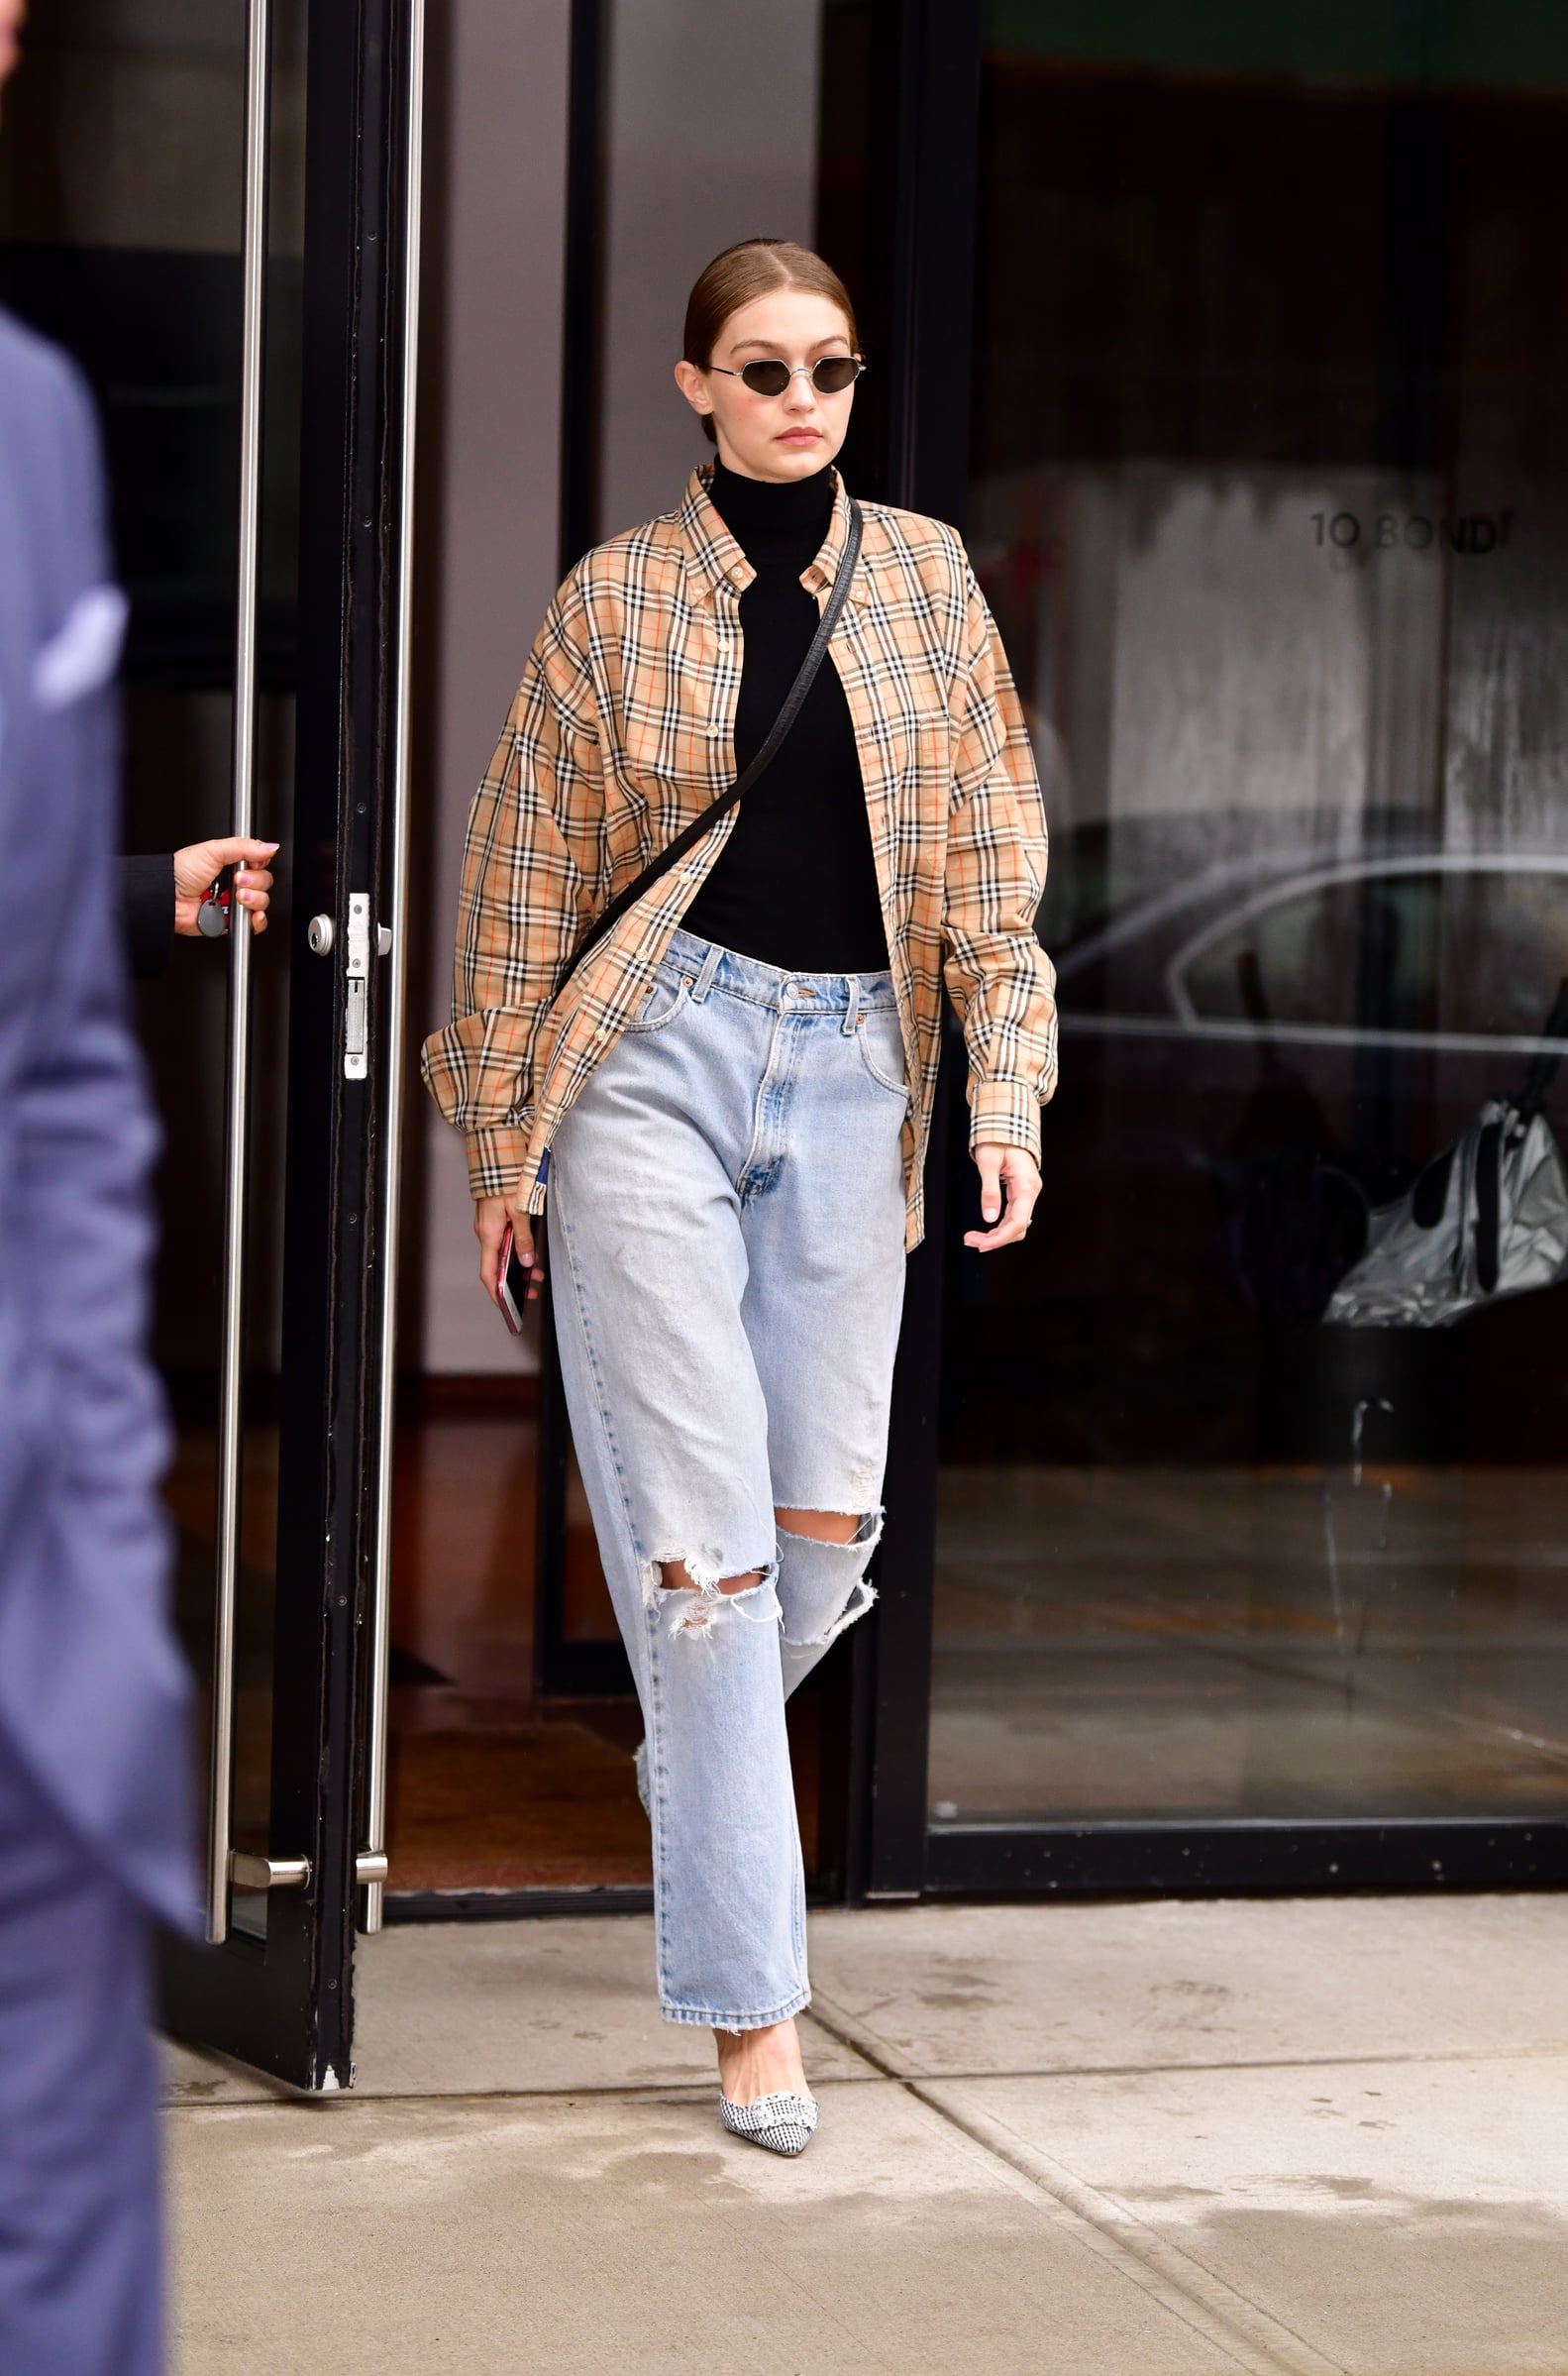 Celebrities in Jeans Fall 2018 | POPSUGAR Fashion